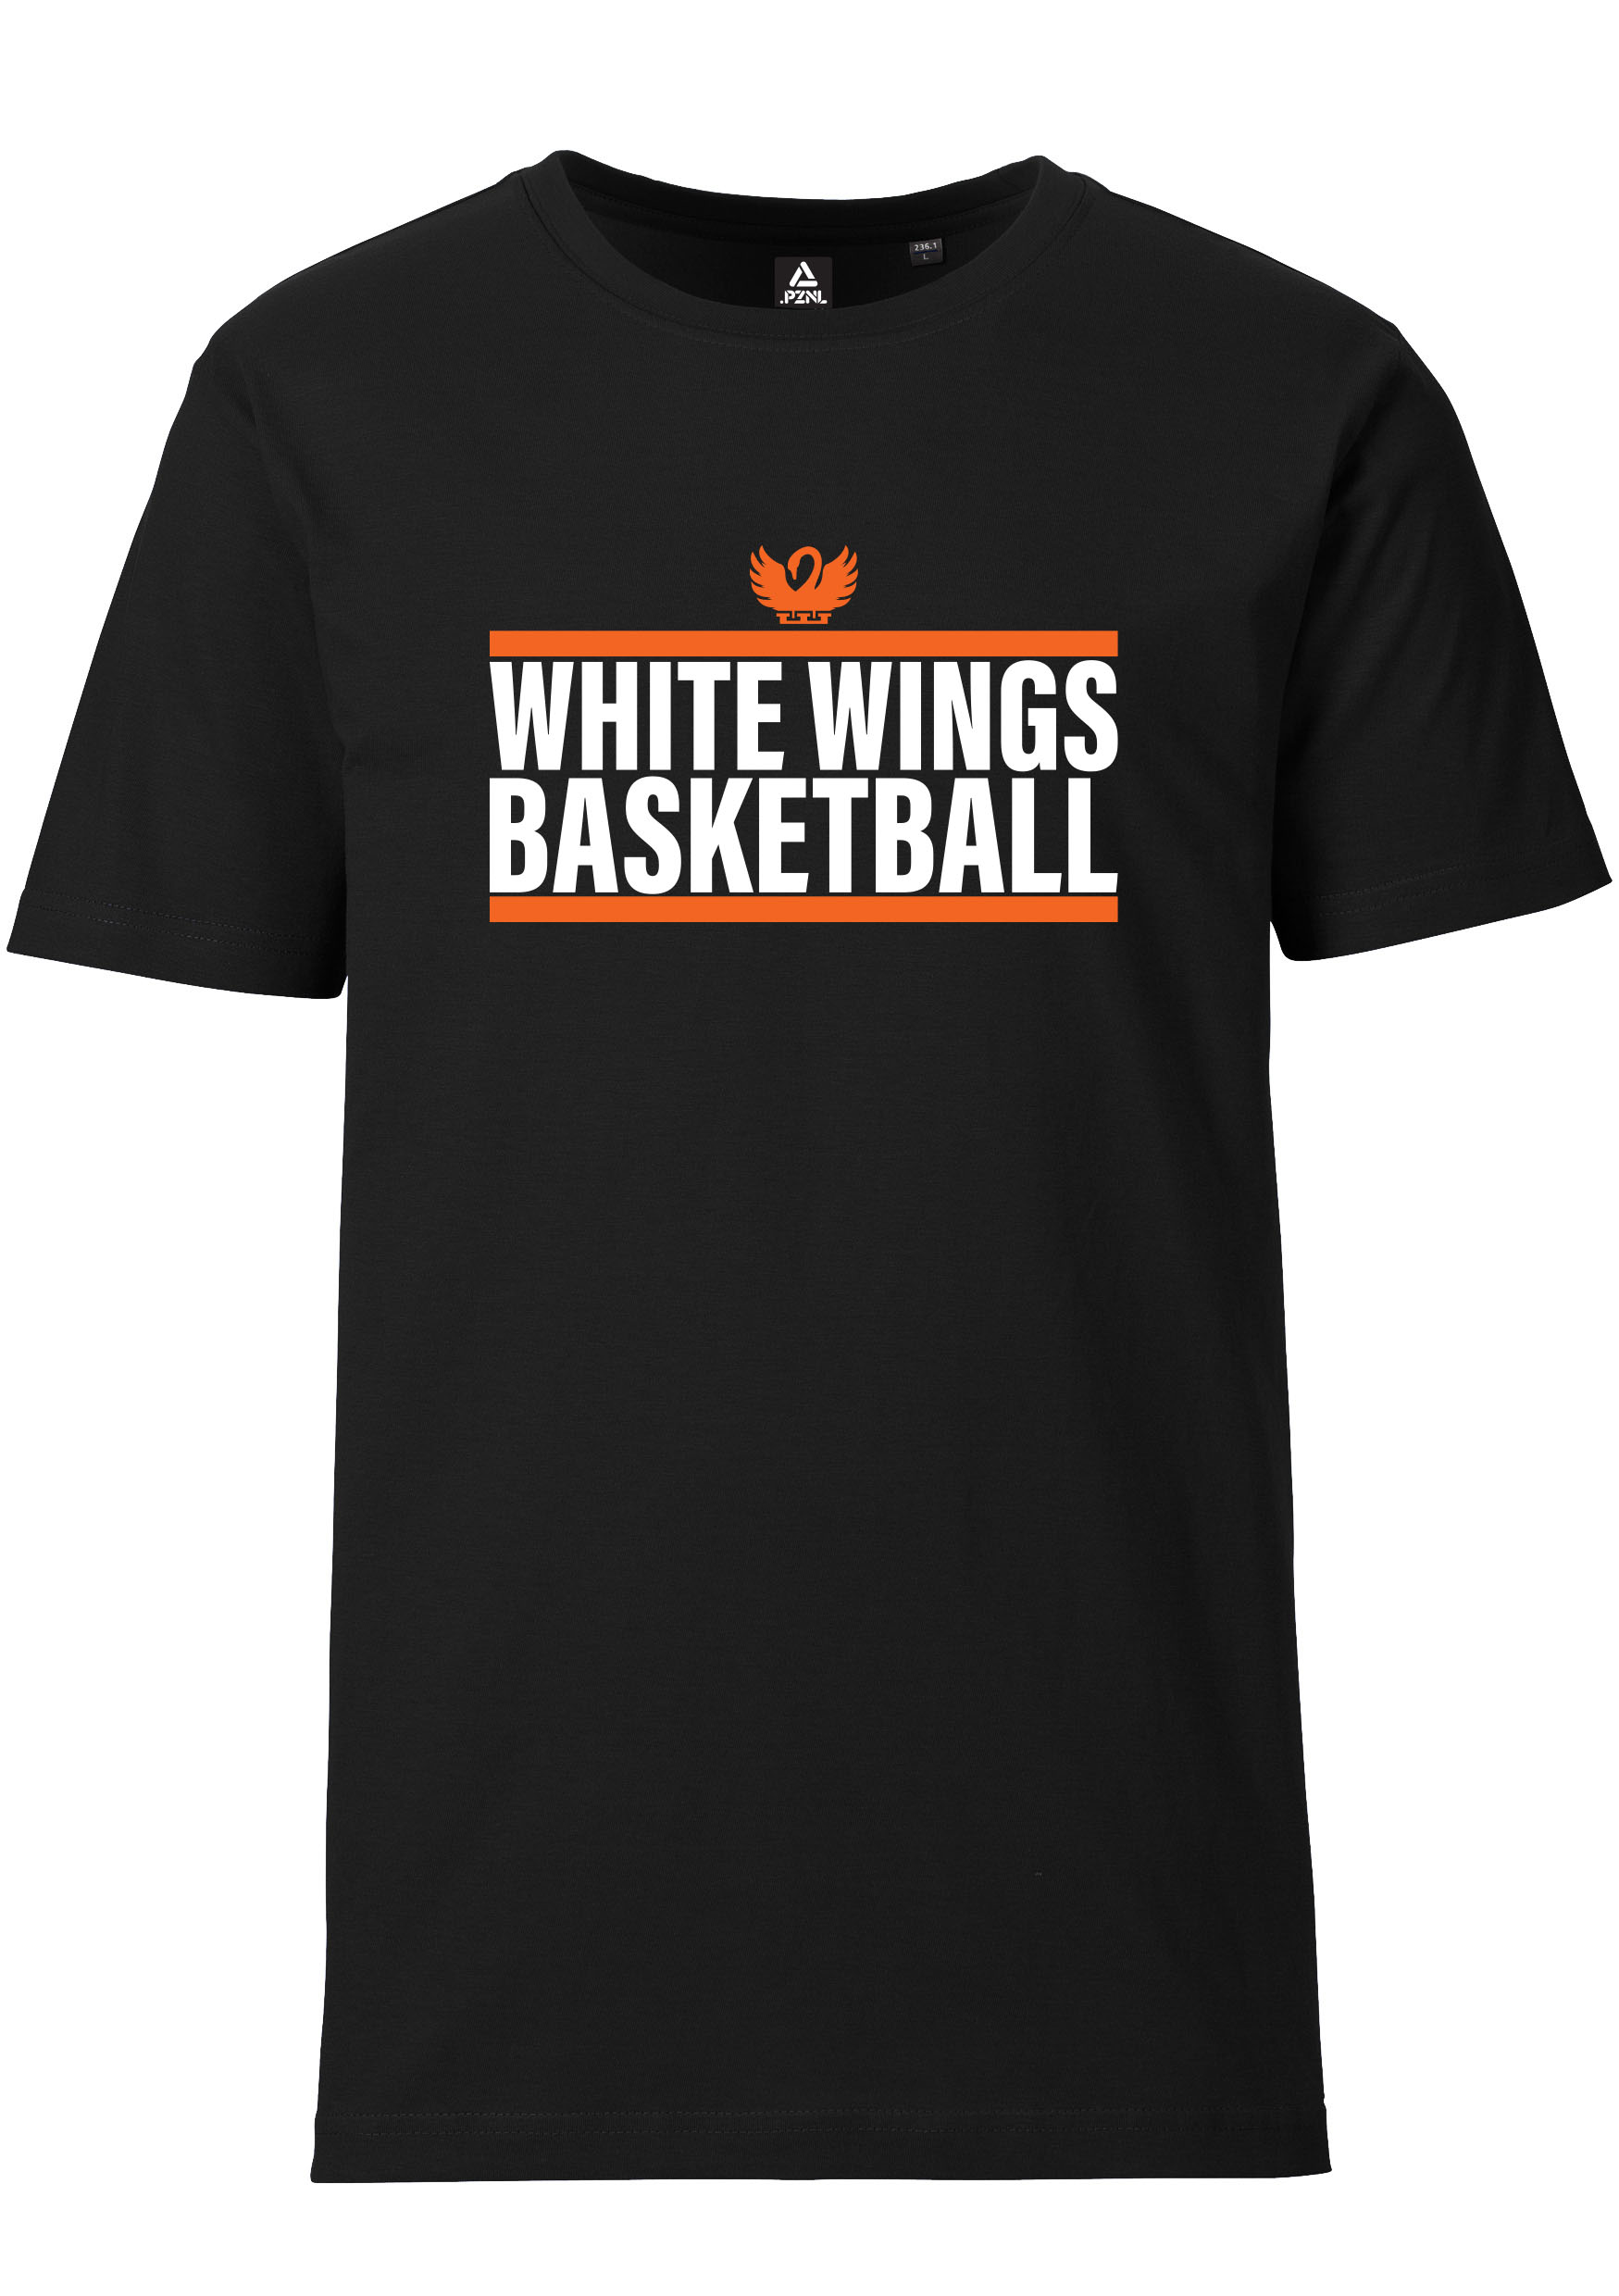 WhiteWings Basketball T-Shirt